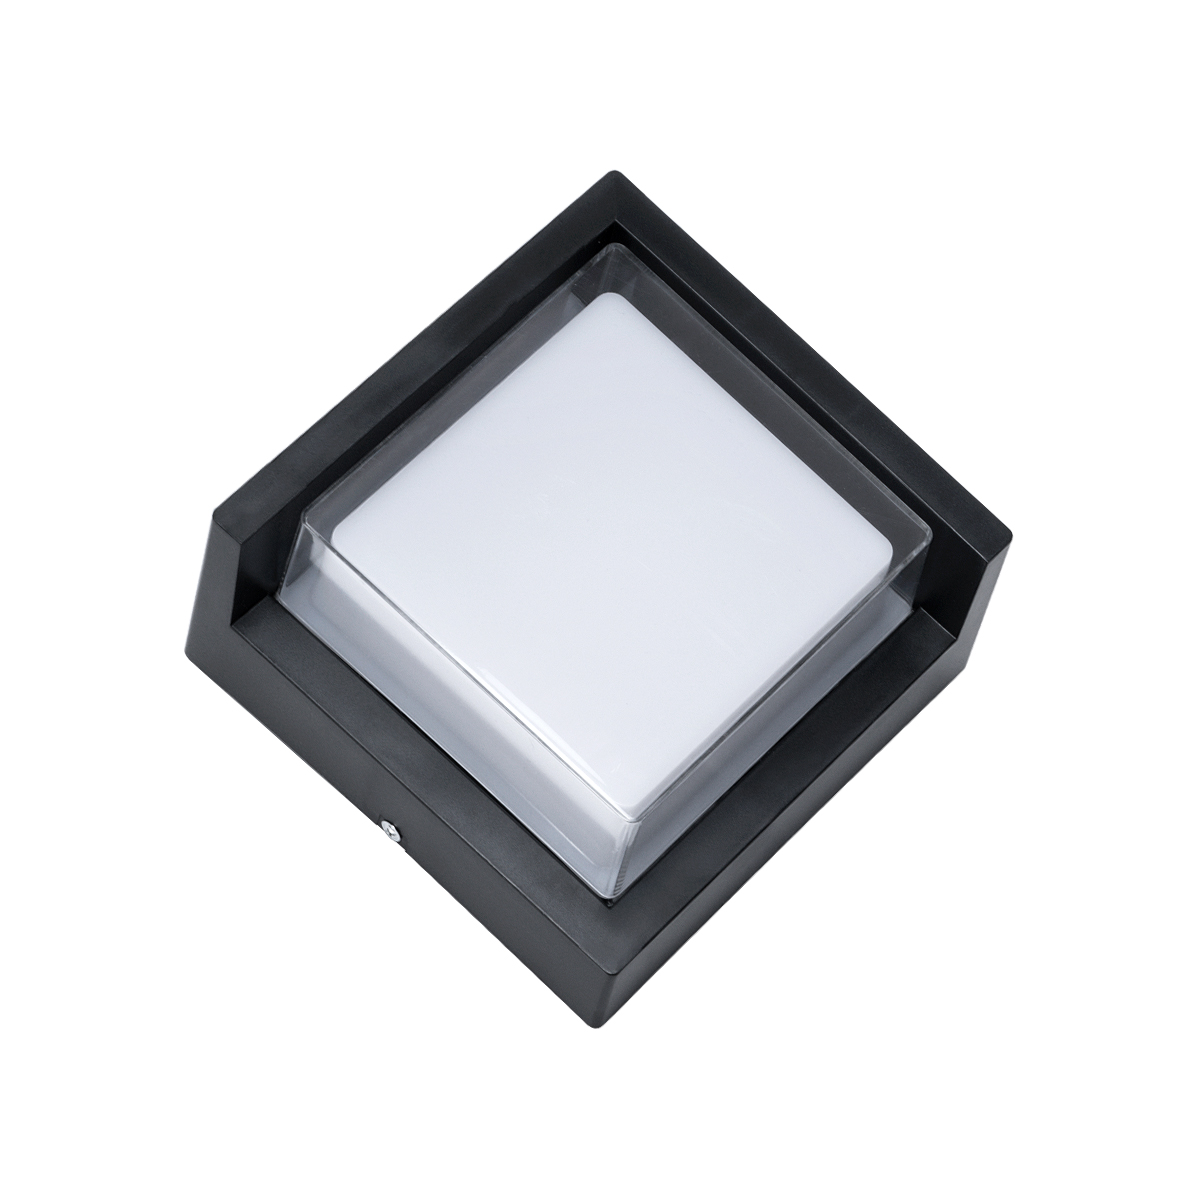 GLOBOSTAR® APEX 60770 Φωτιστικό Τοίχου – Απλίκα Αρχιτεκτονικού Φωτισμού Εσωτερικού/Εξωτερικού Χώρου Up or Down LED 10W 1050lm 120° AC175-265V Αδιάβροχο IP65 – Πλαστικό Σώμα – Φυσικό λευκό 4500K – Μ17 x Π17 x Υ9cm – Μαύρο – Bridgelux Chip – 3 Χρόνια Εγγύηση